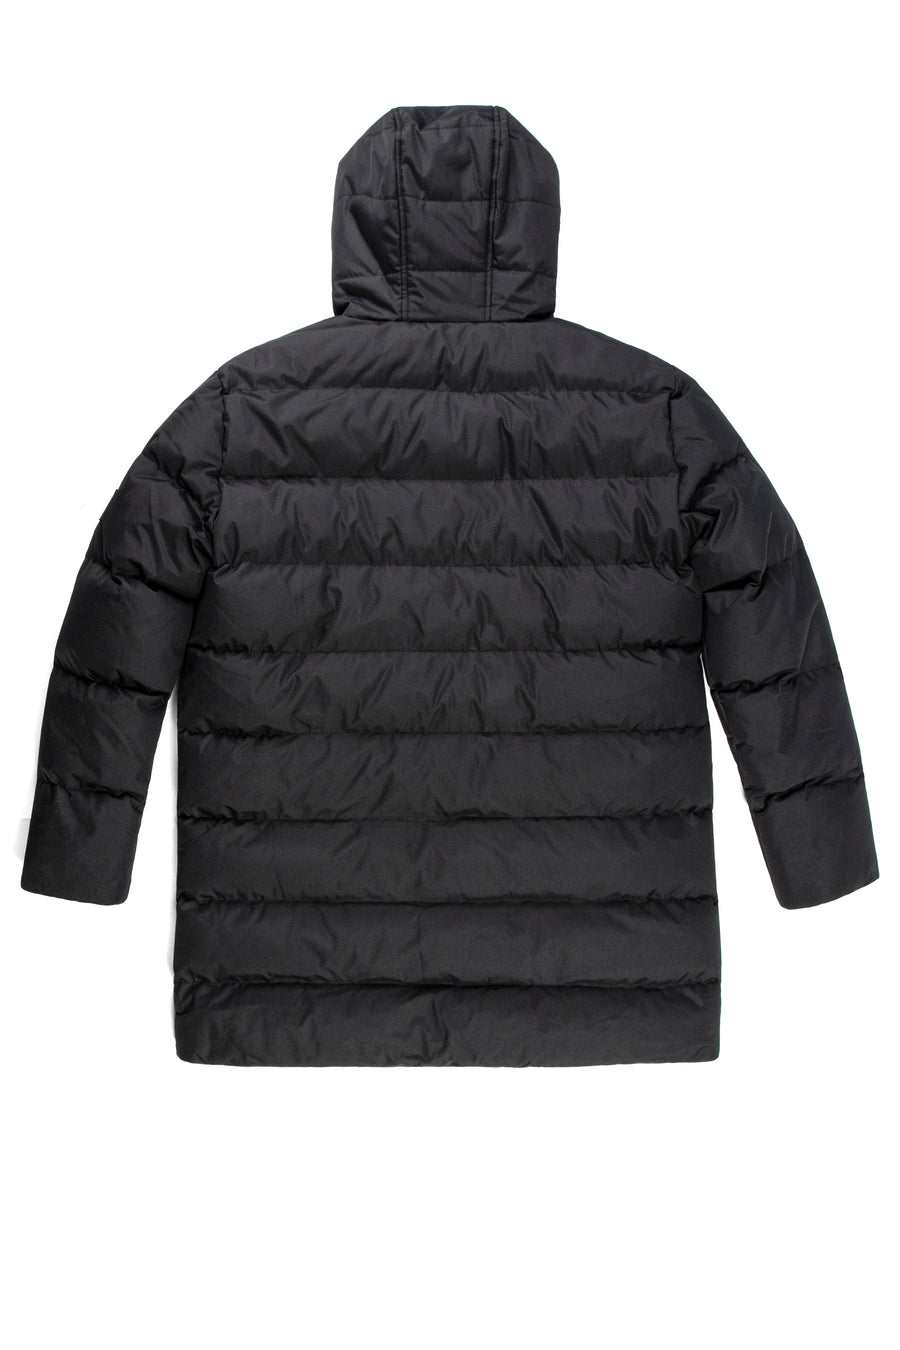 Saint Moritz Jacket in Black